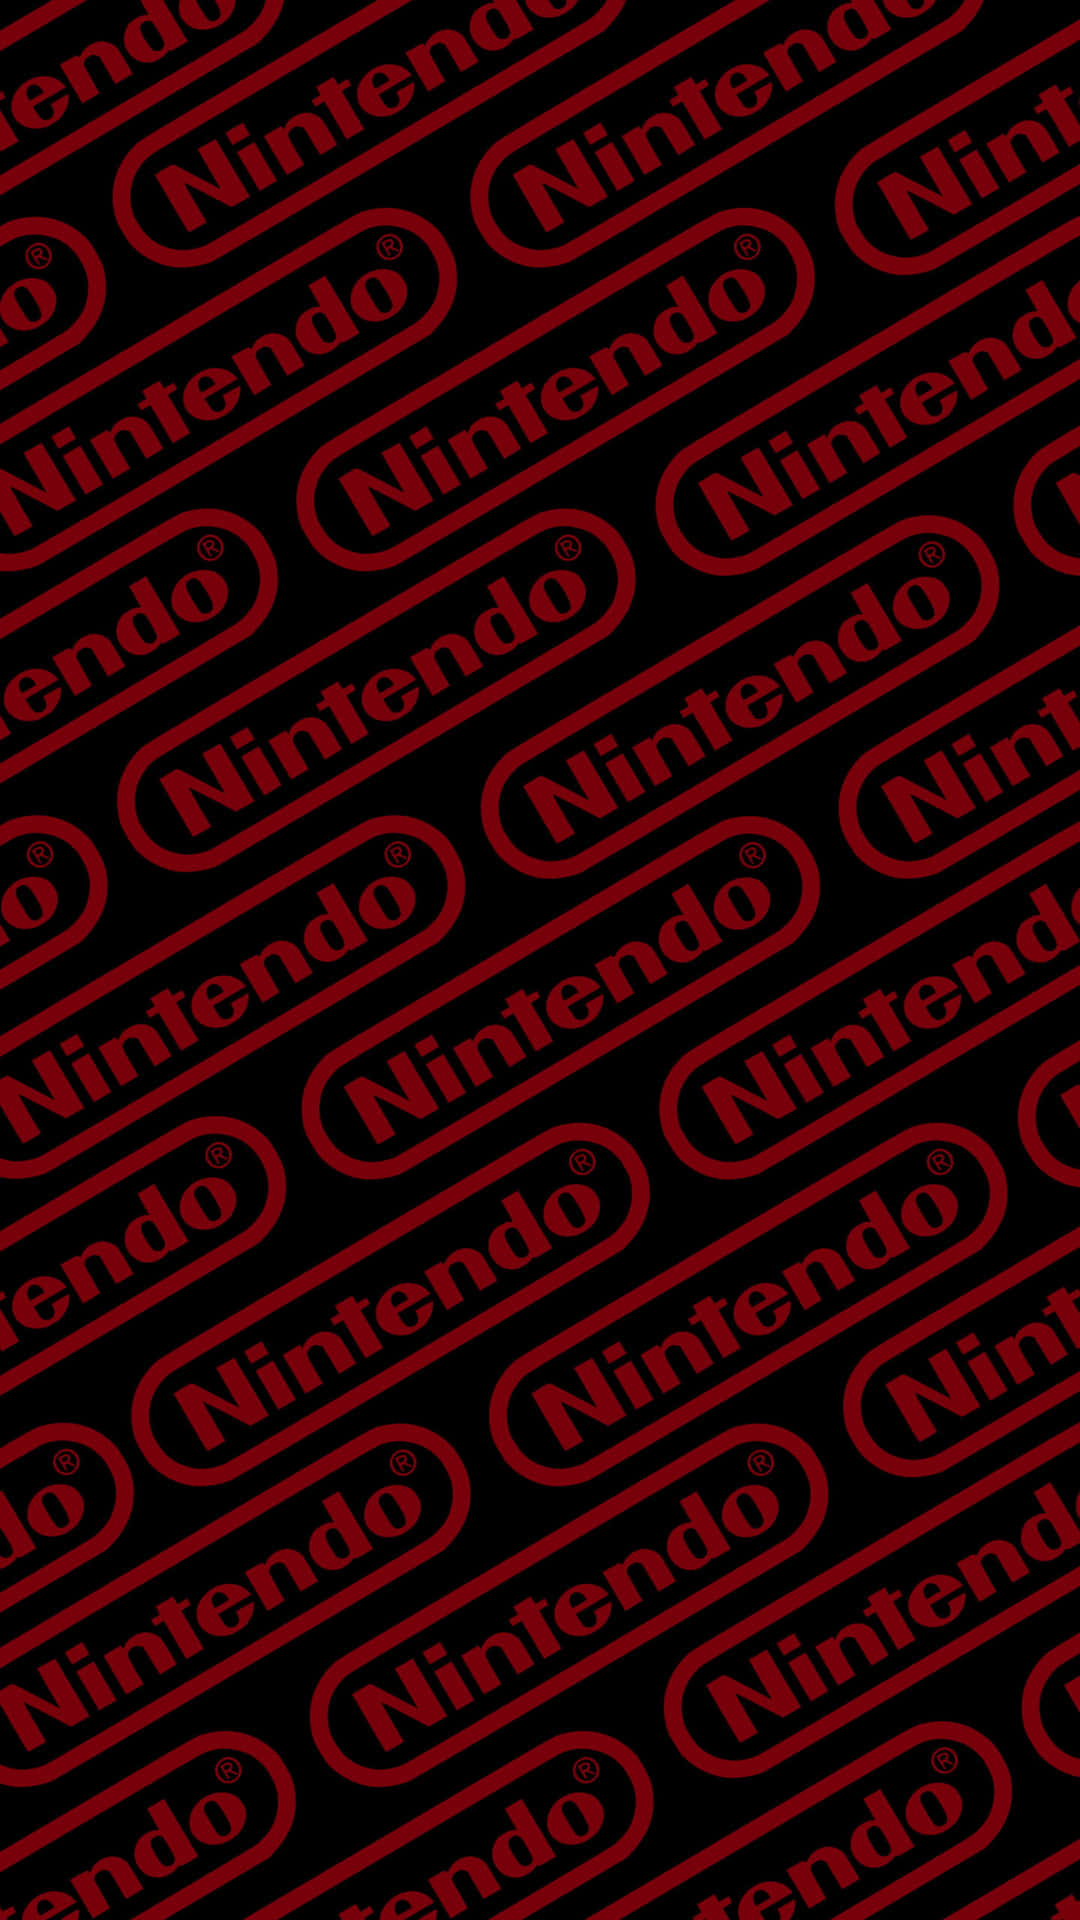 Unlogo Nintendo Rosso E Nero Su Uno Sfondo Nero. Sfondo